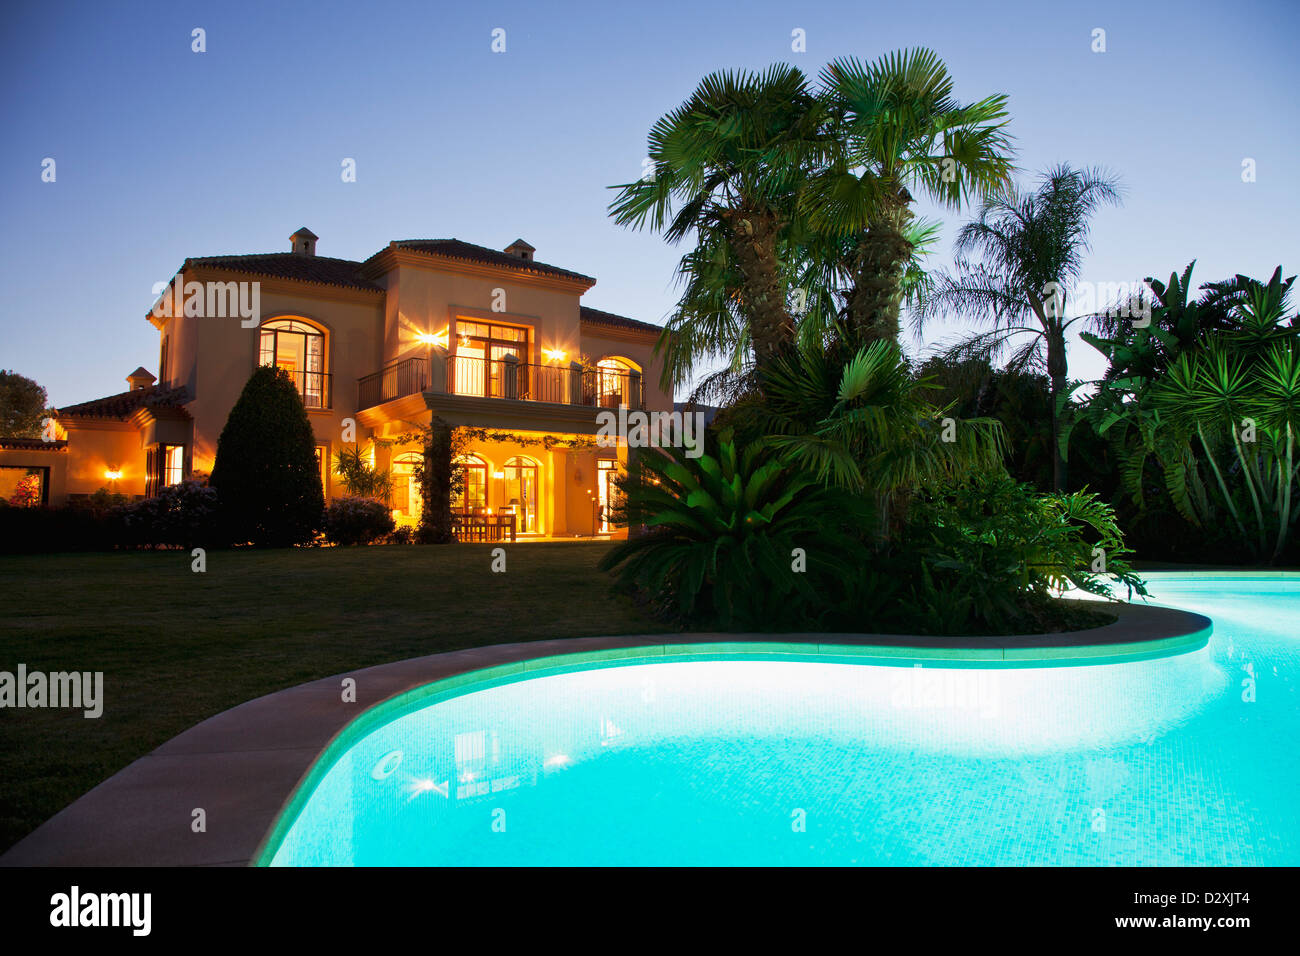 Luxury swimming pool and villa illuminated at night Stock Photo